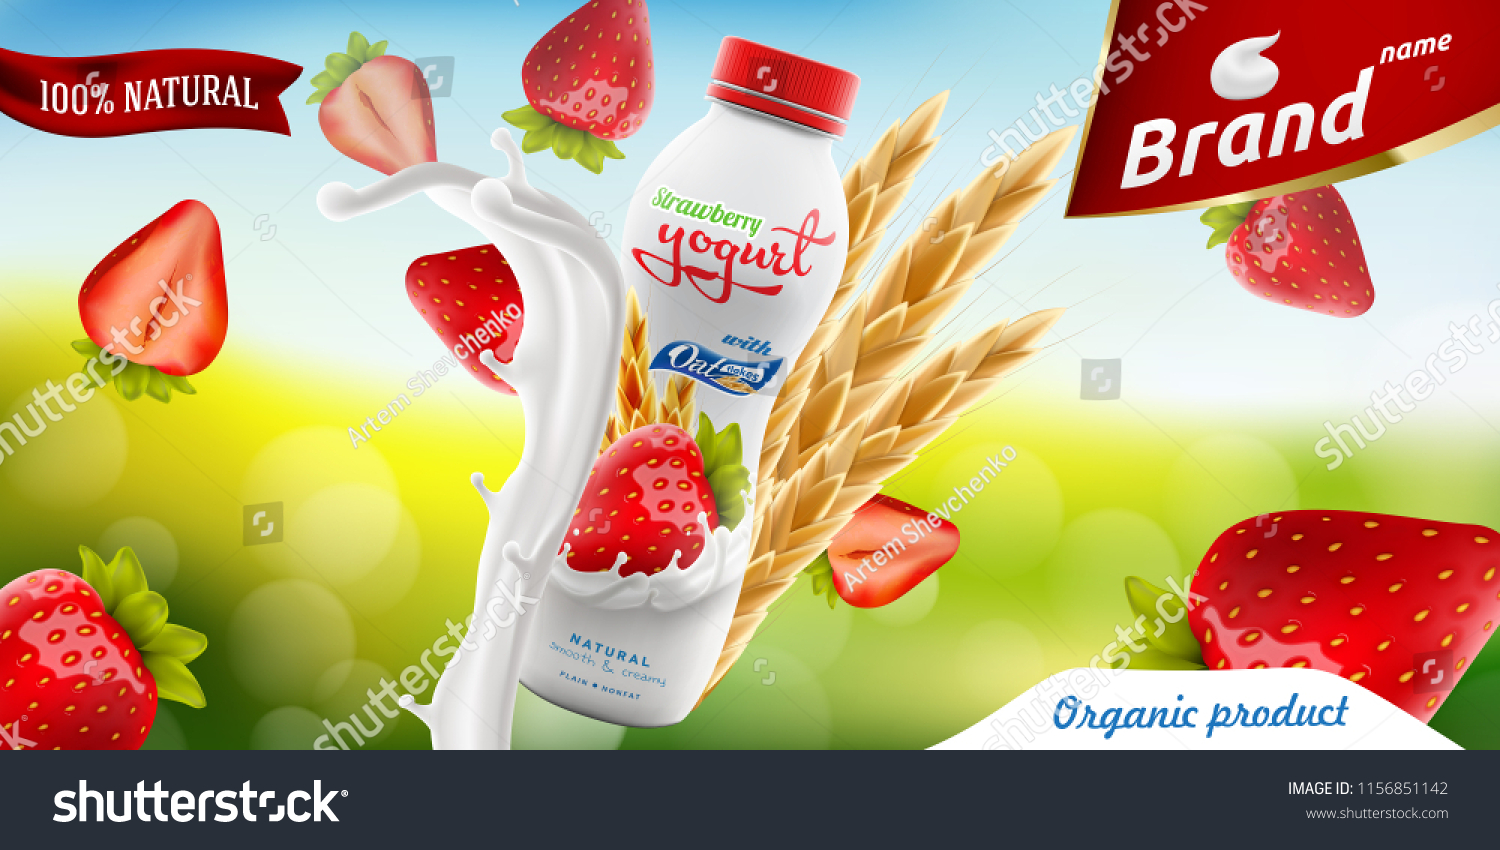 Download Strawberry Drinking Yogurt Bottle Oats On Stock Vector Royalty Free 1156851142 PSD Mockup Templates